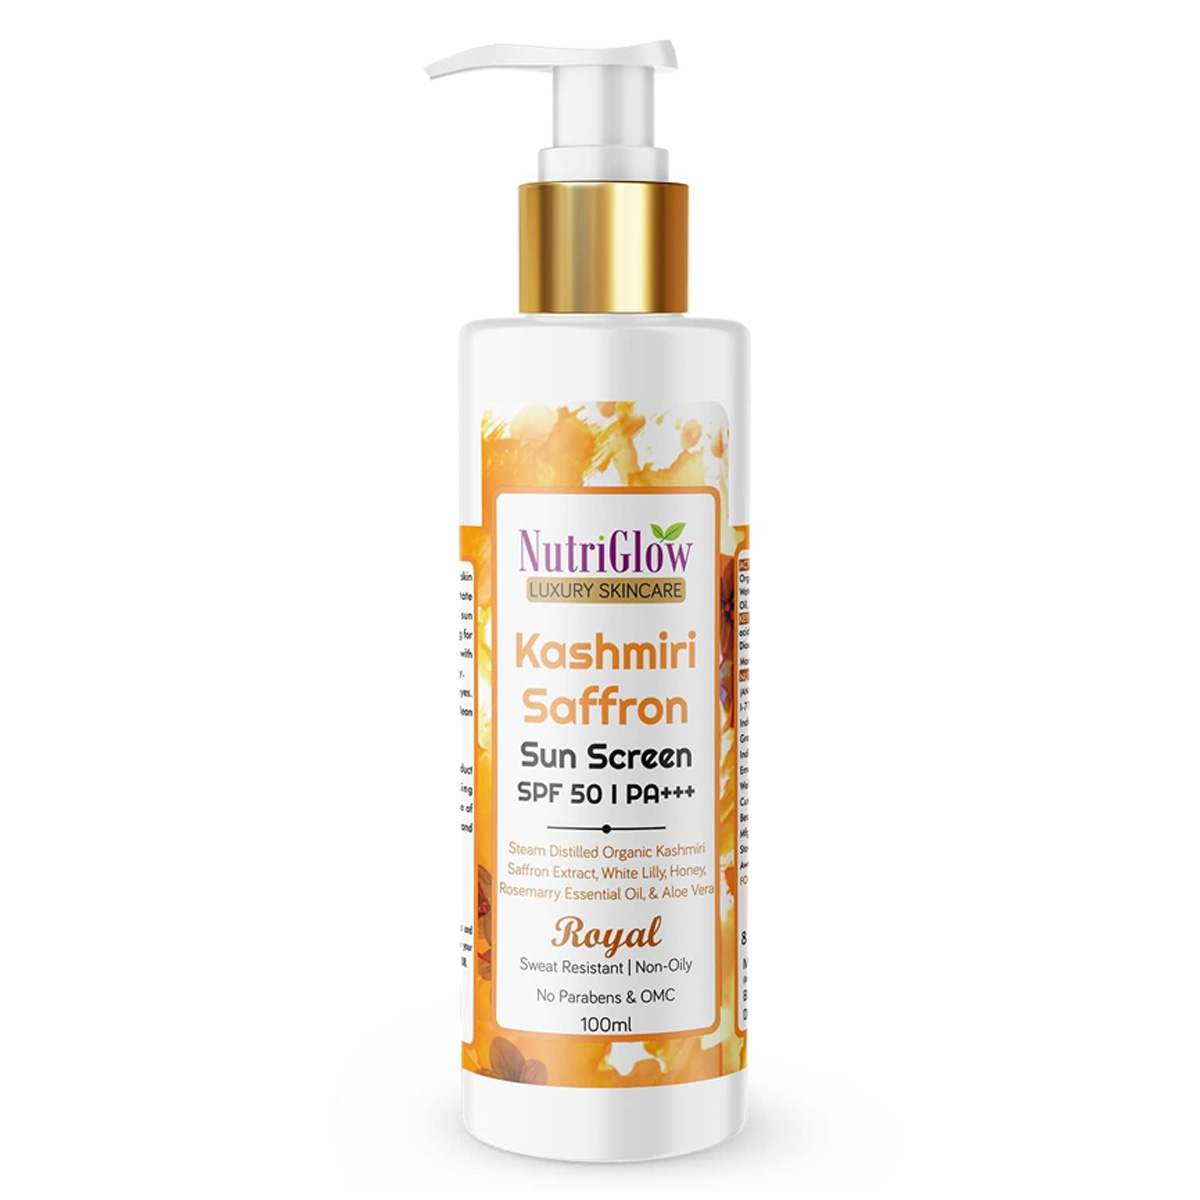 NutriGlow Luxury Skincare Kashmiri Saffron Sunscreen SPF 50 Pa+++, 100ml